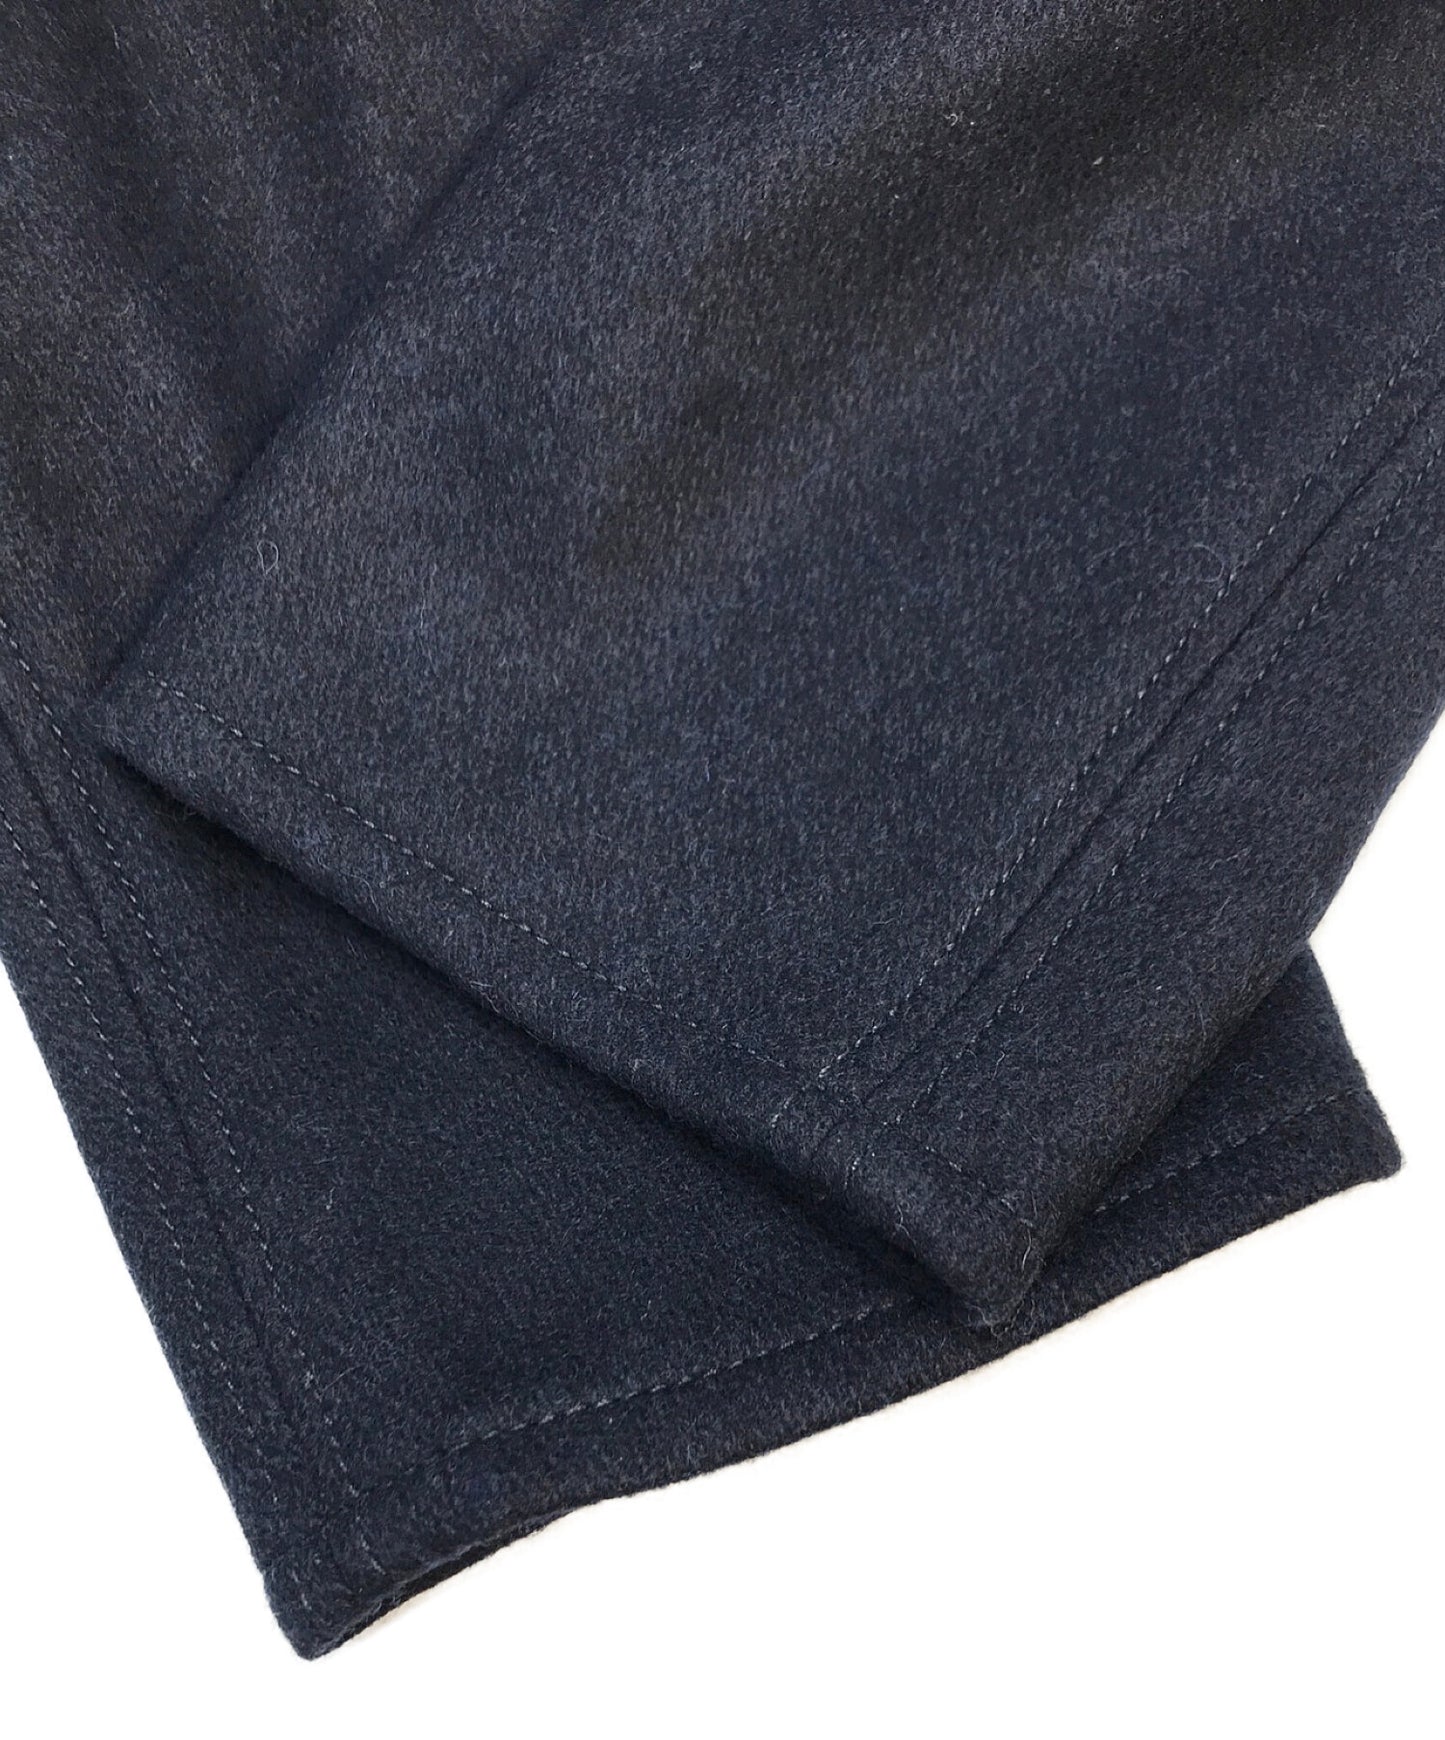 COMME DES GARCONS襯衫羊毛寬布平原×聚酯迷彩×棉質斜紋外套17AW W25170